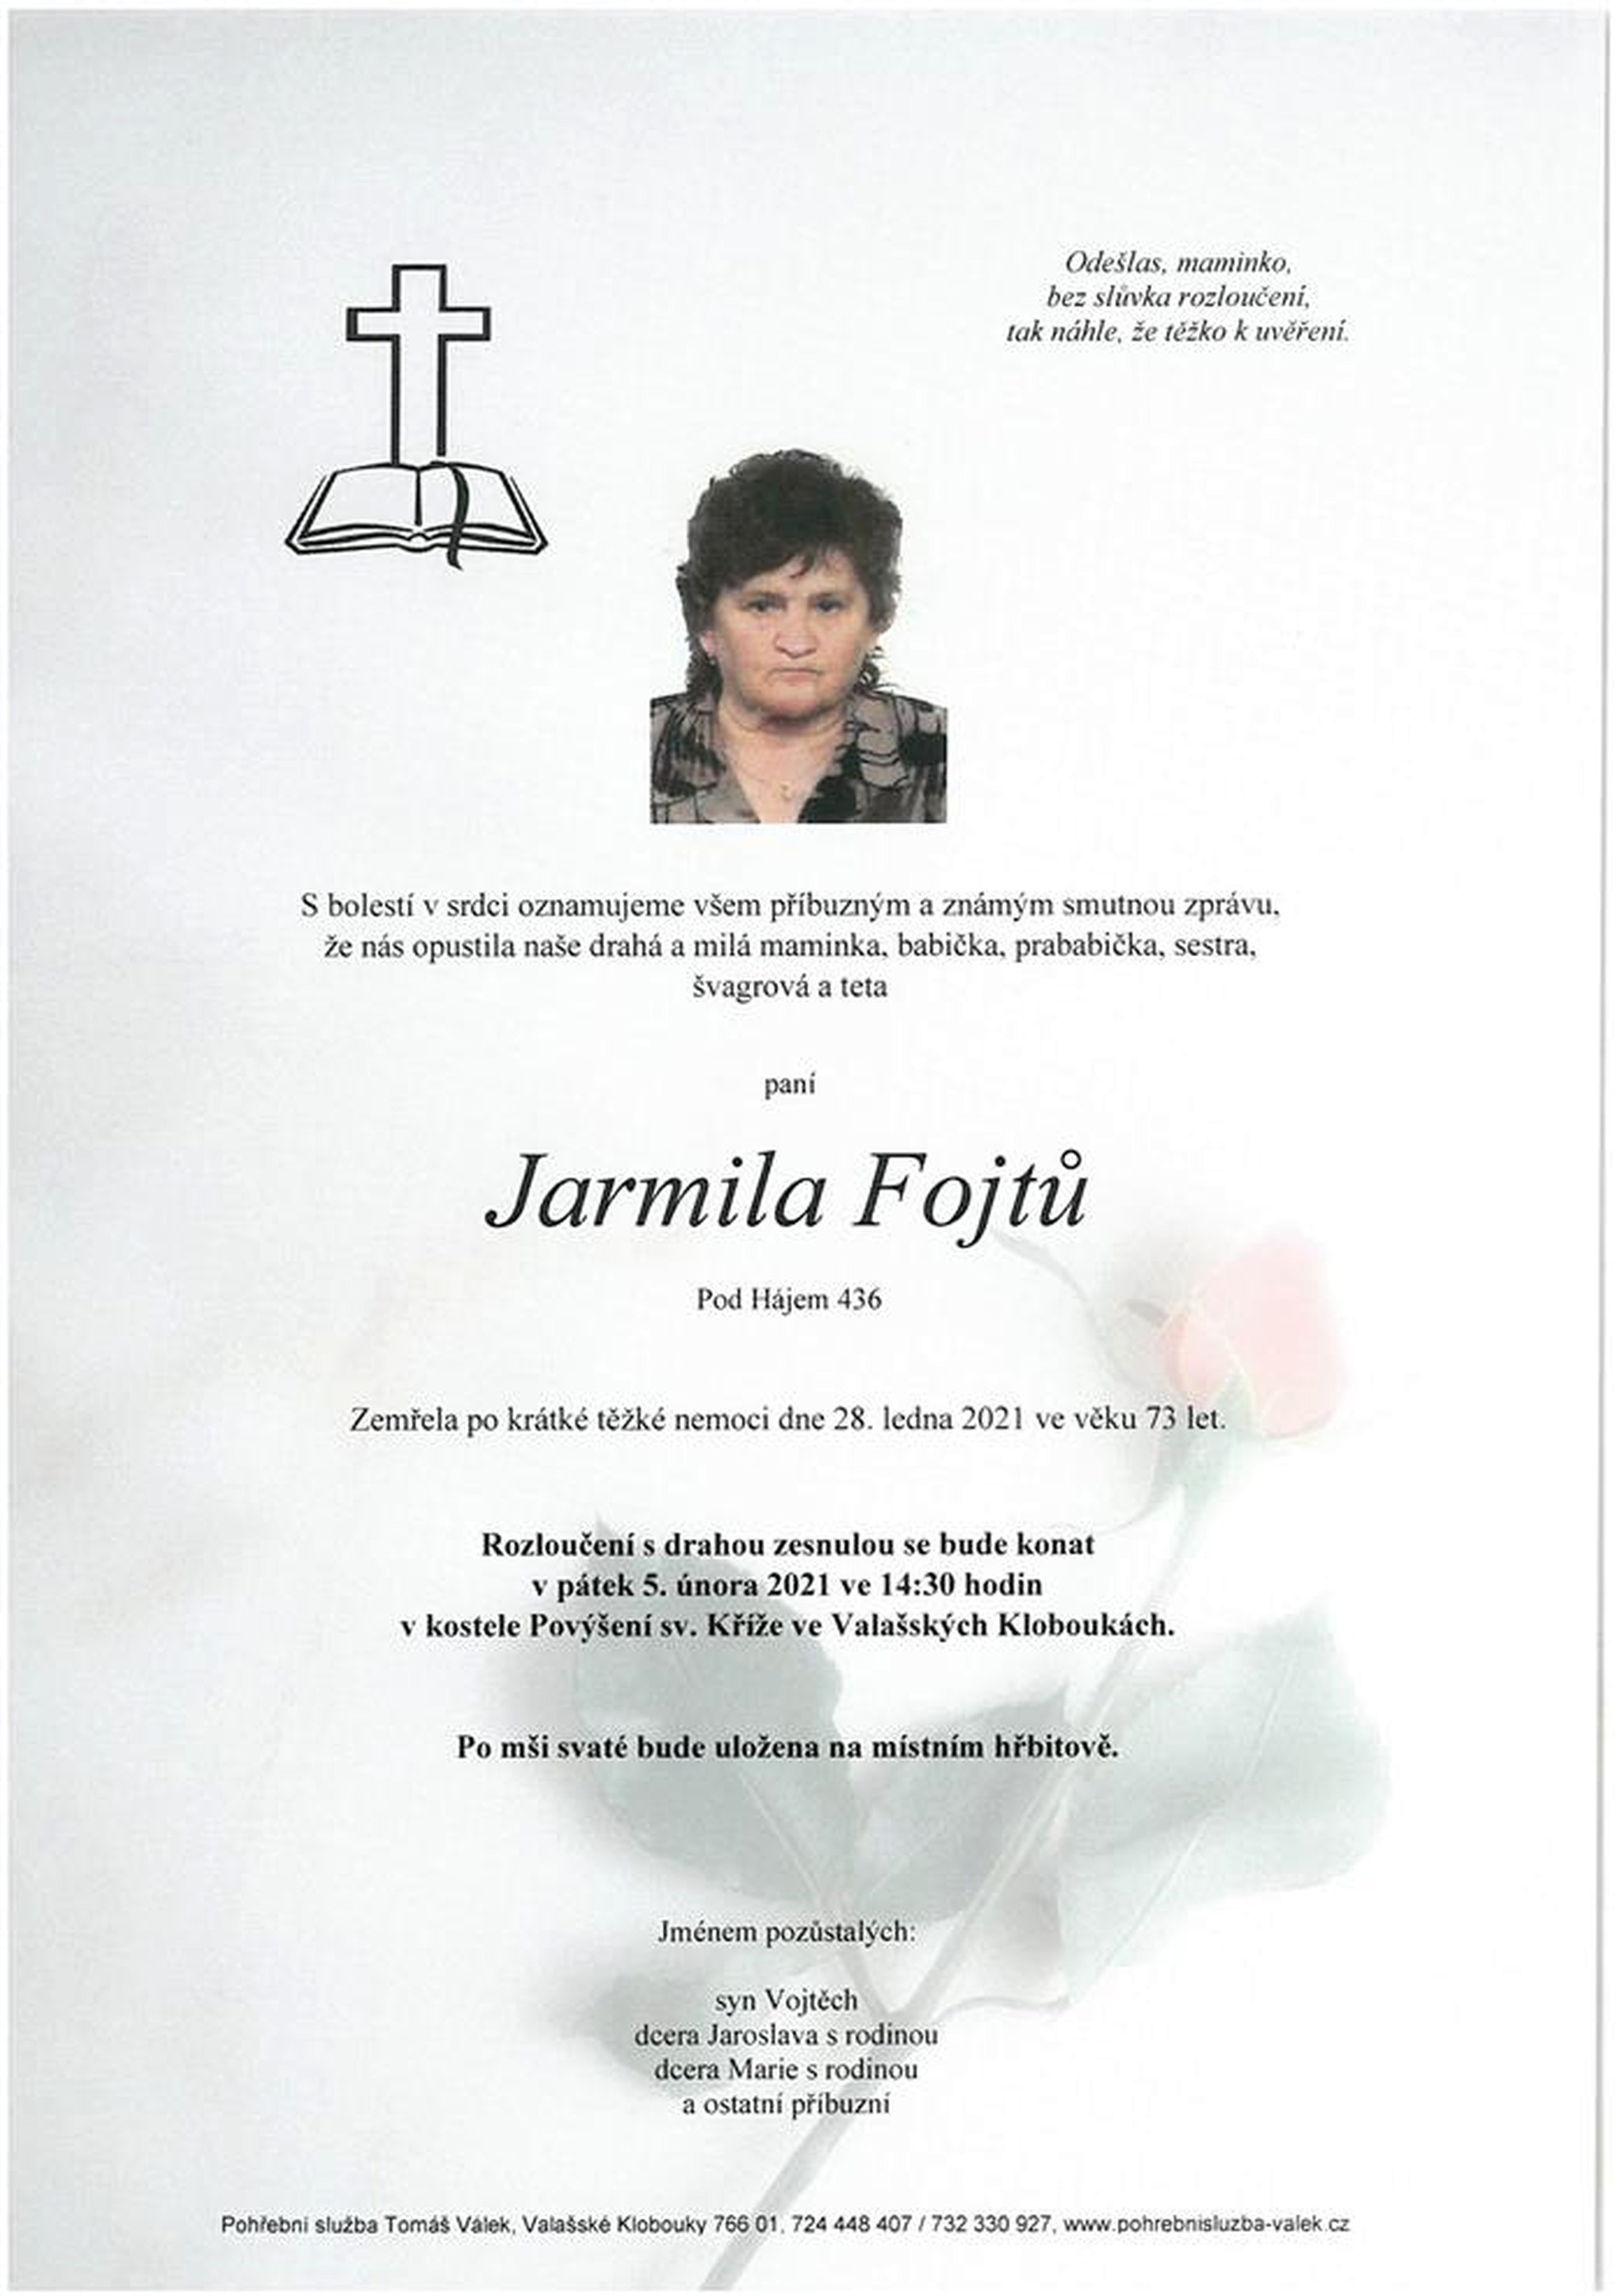 Jarmila Fojtů